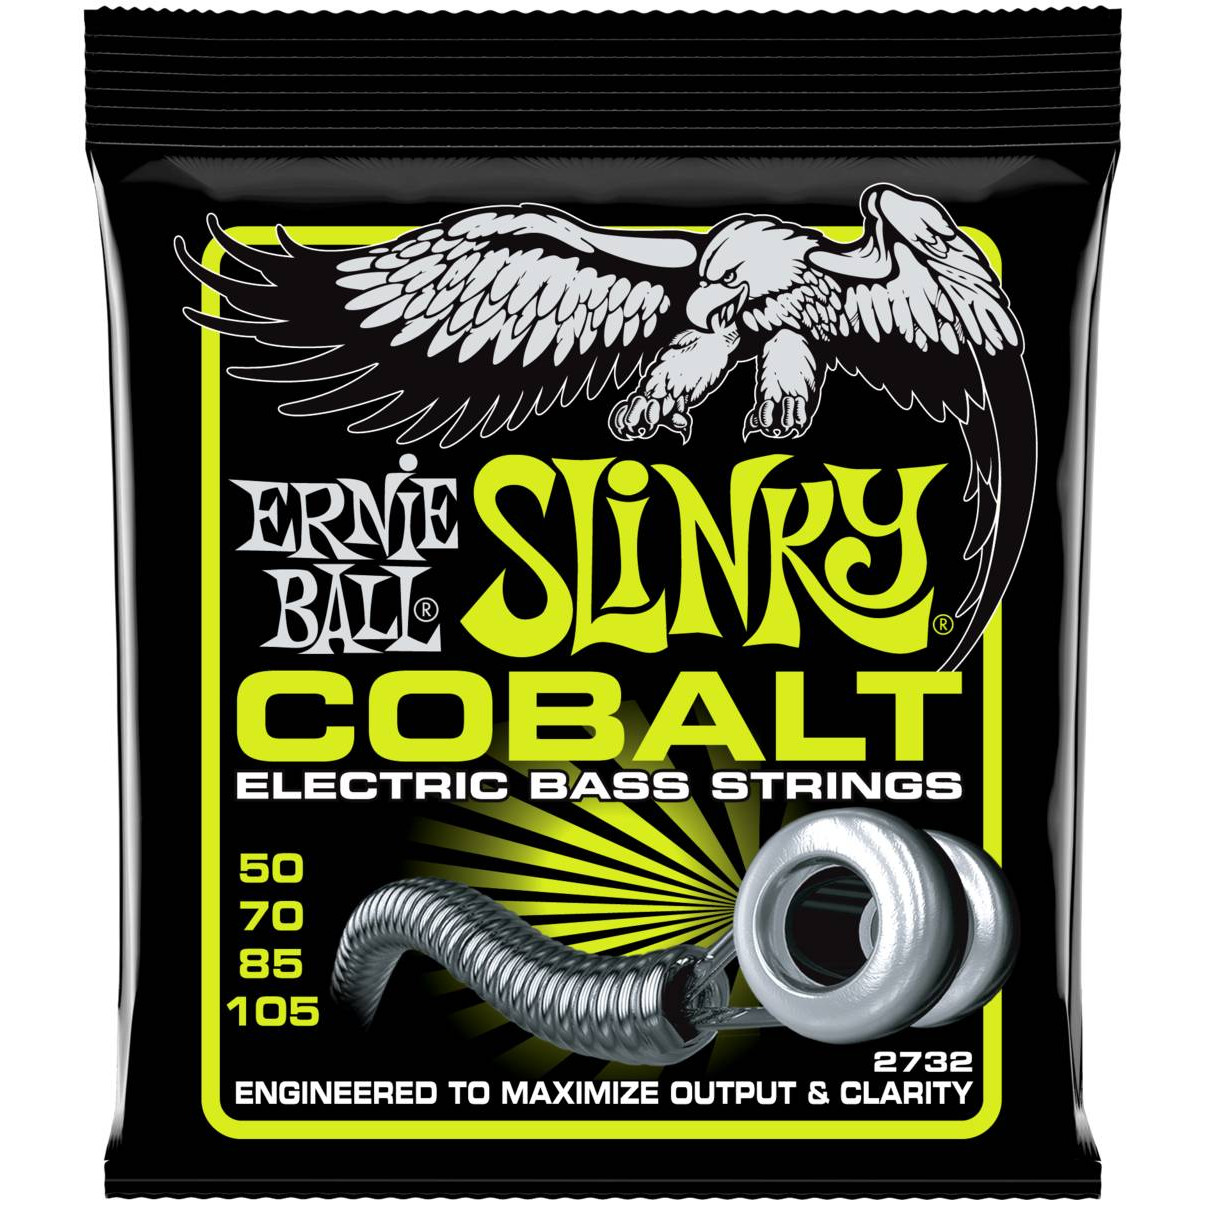 Струны Ernie Ball 2732 Slinky Cobalt Regular струны ernie ball 3836 coated bass regular slinky